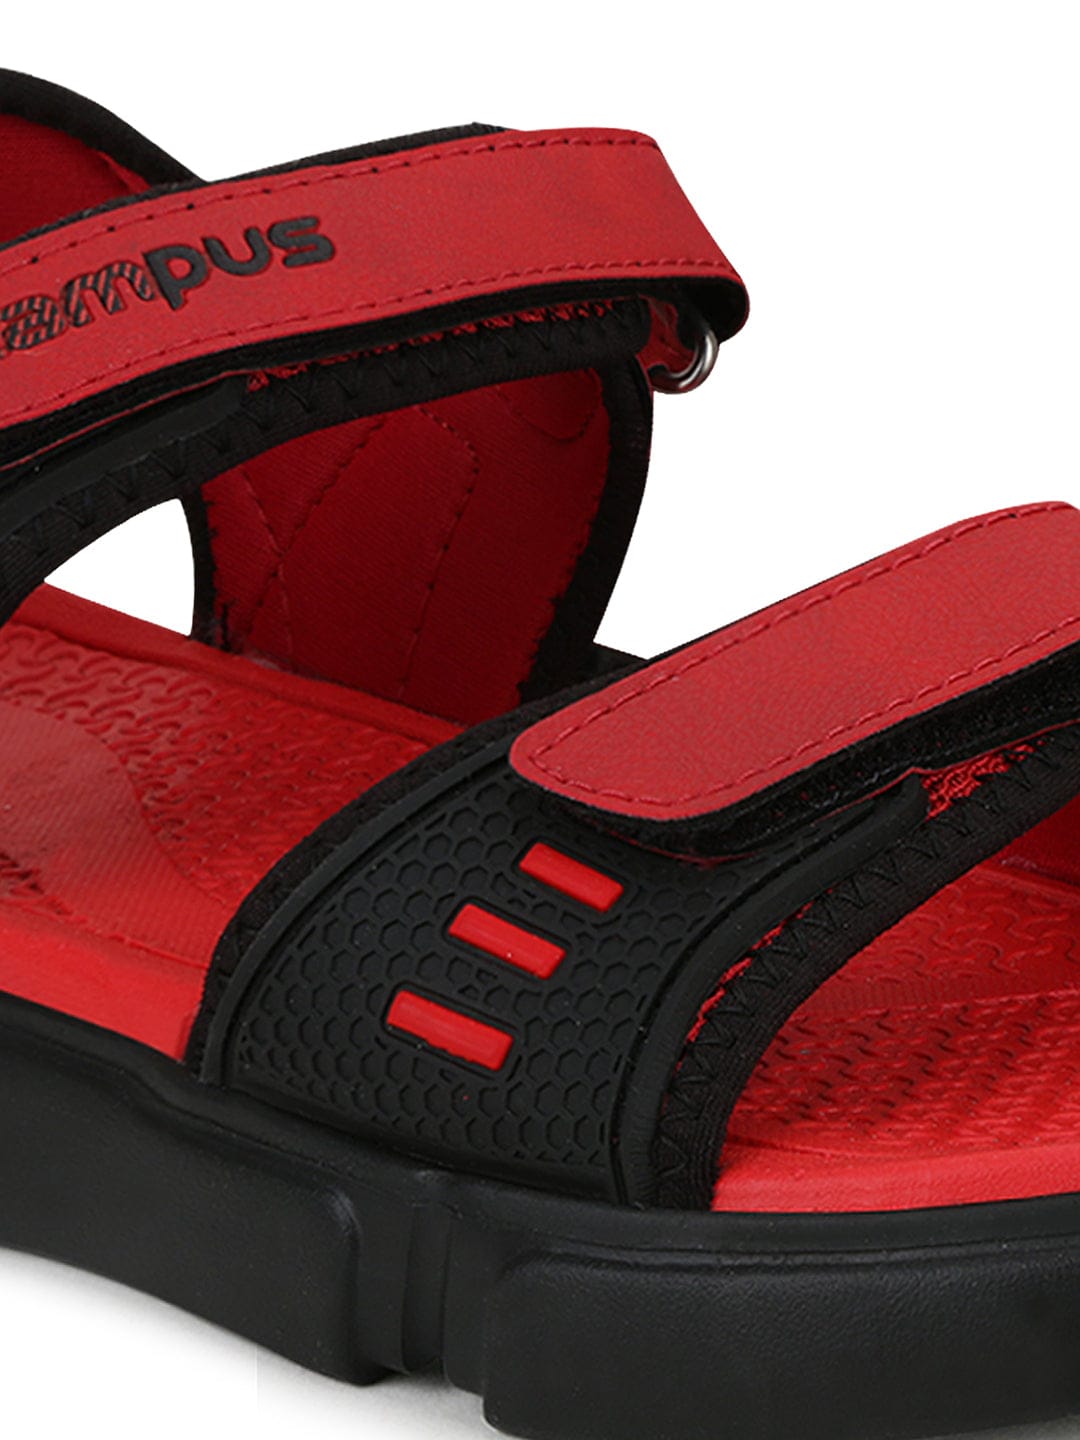 Sparx SPARX SANDALS 407 GENTS Men Black, Red Sports Sandals - Buy Black, Red  Color Sparx SPARX SANDALS 407 GENTS Men Black, Red Sports Sandals Online at  Best Price - Shop Online